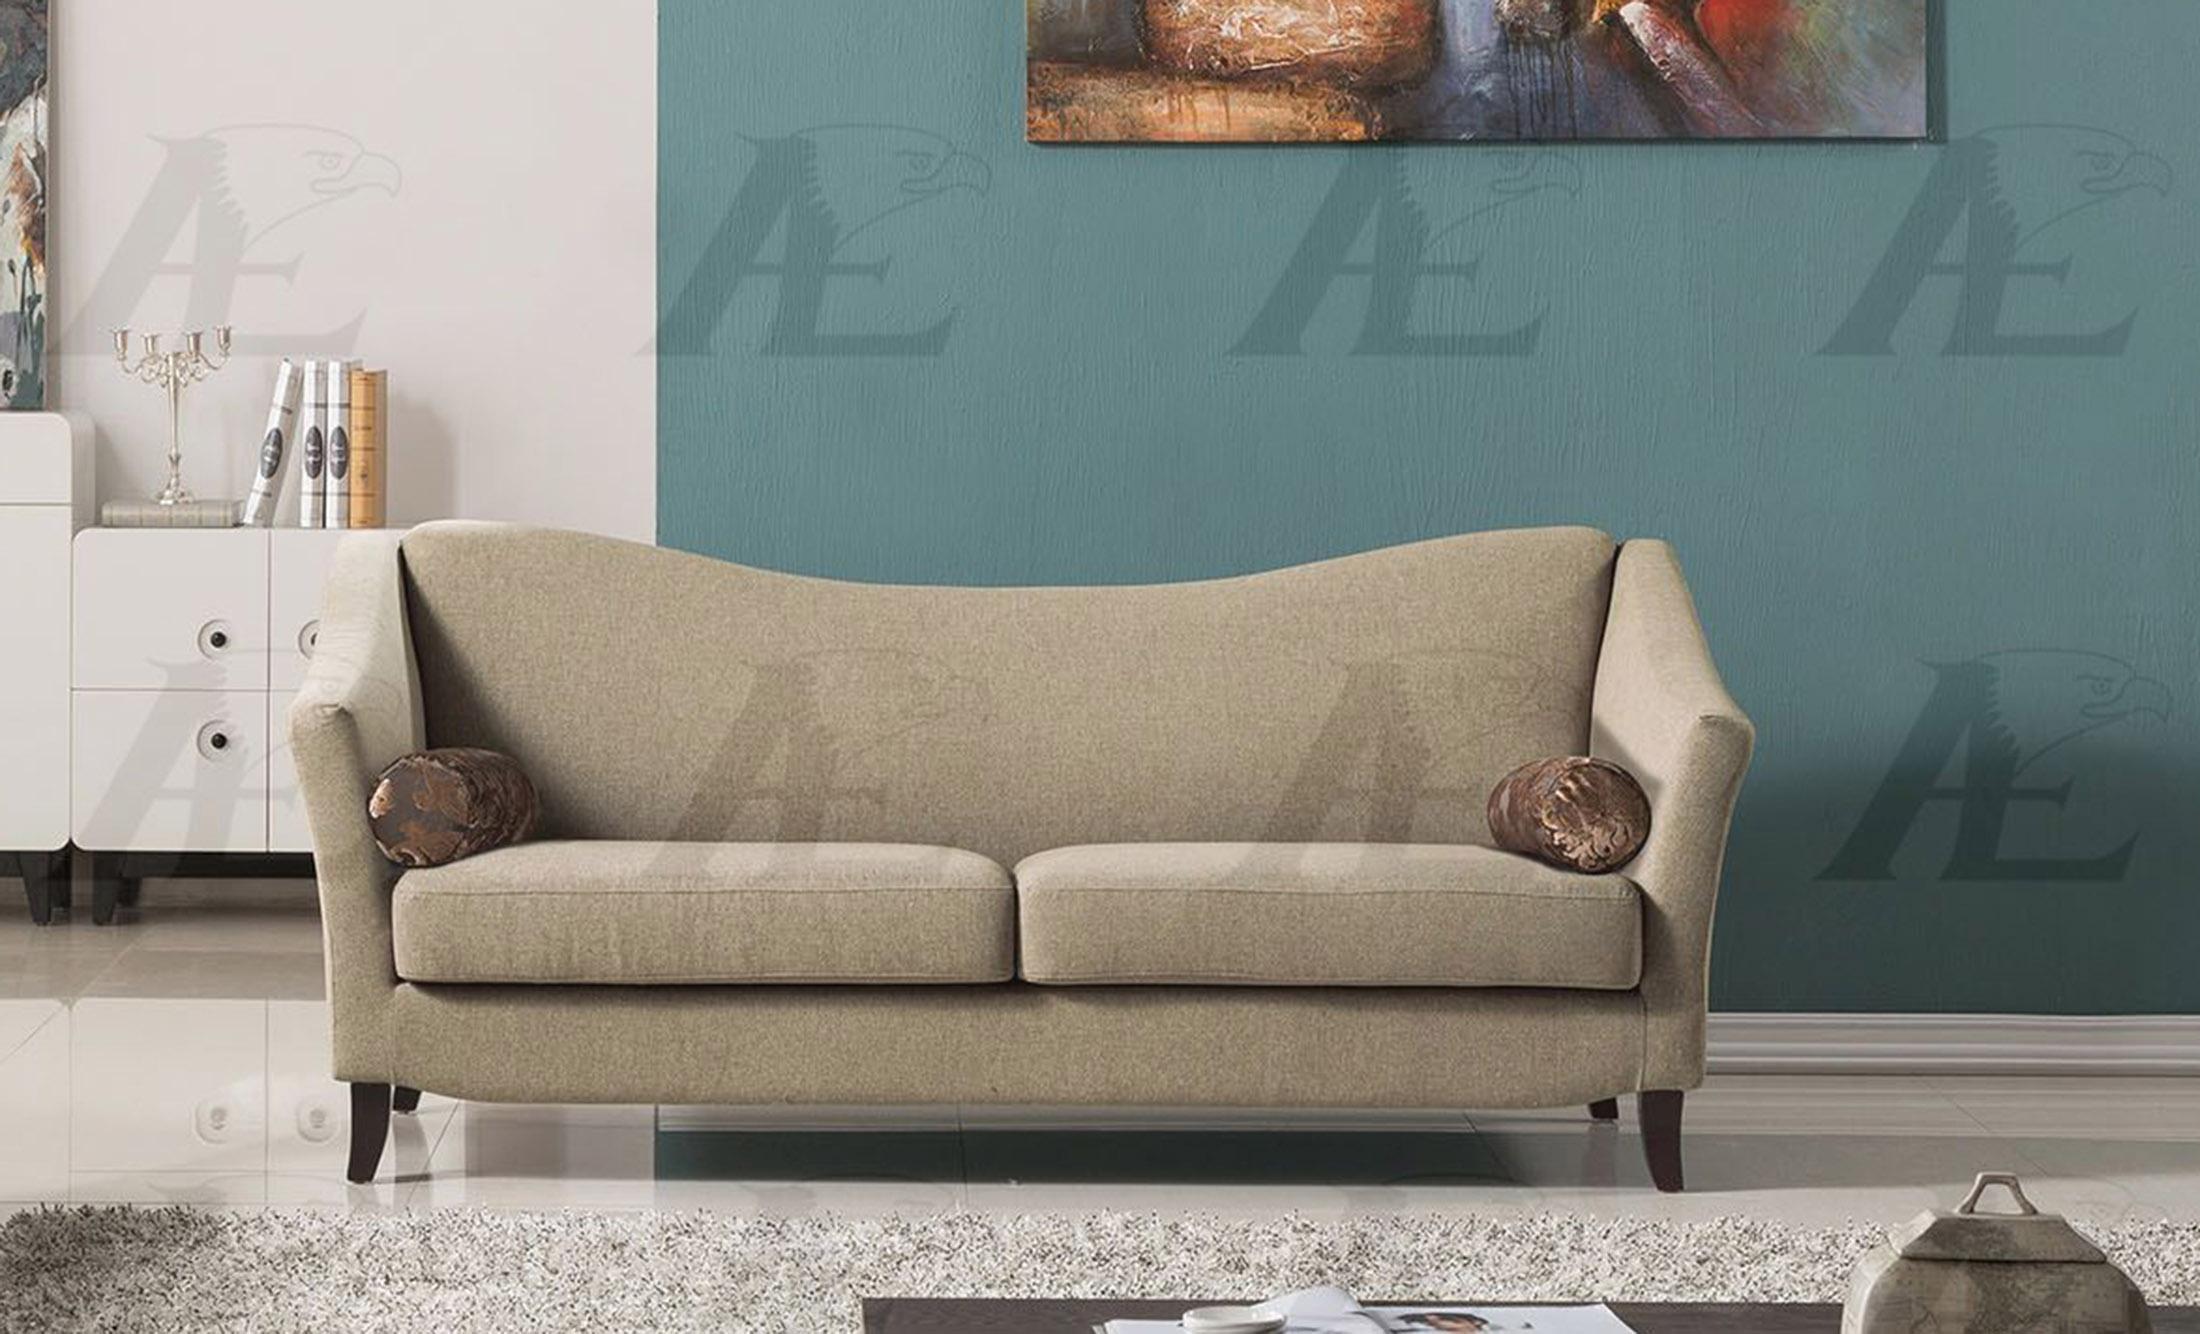 

                    
American Eagle Furniture AE2371 Sofa Tan Fabric Purchase 
